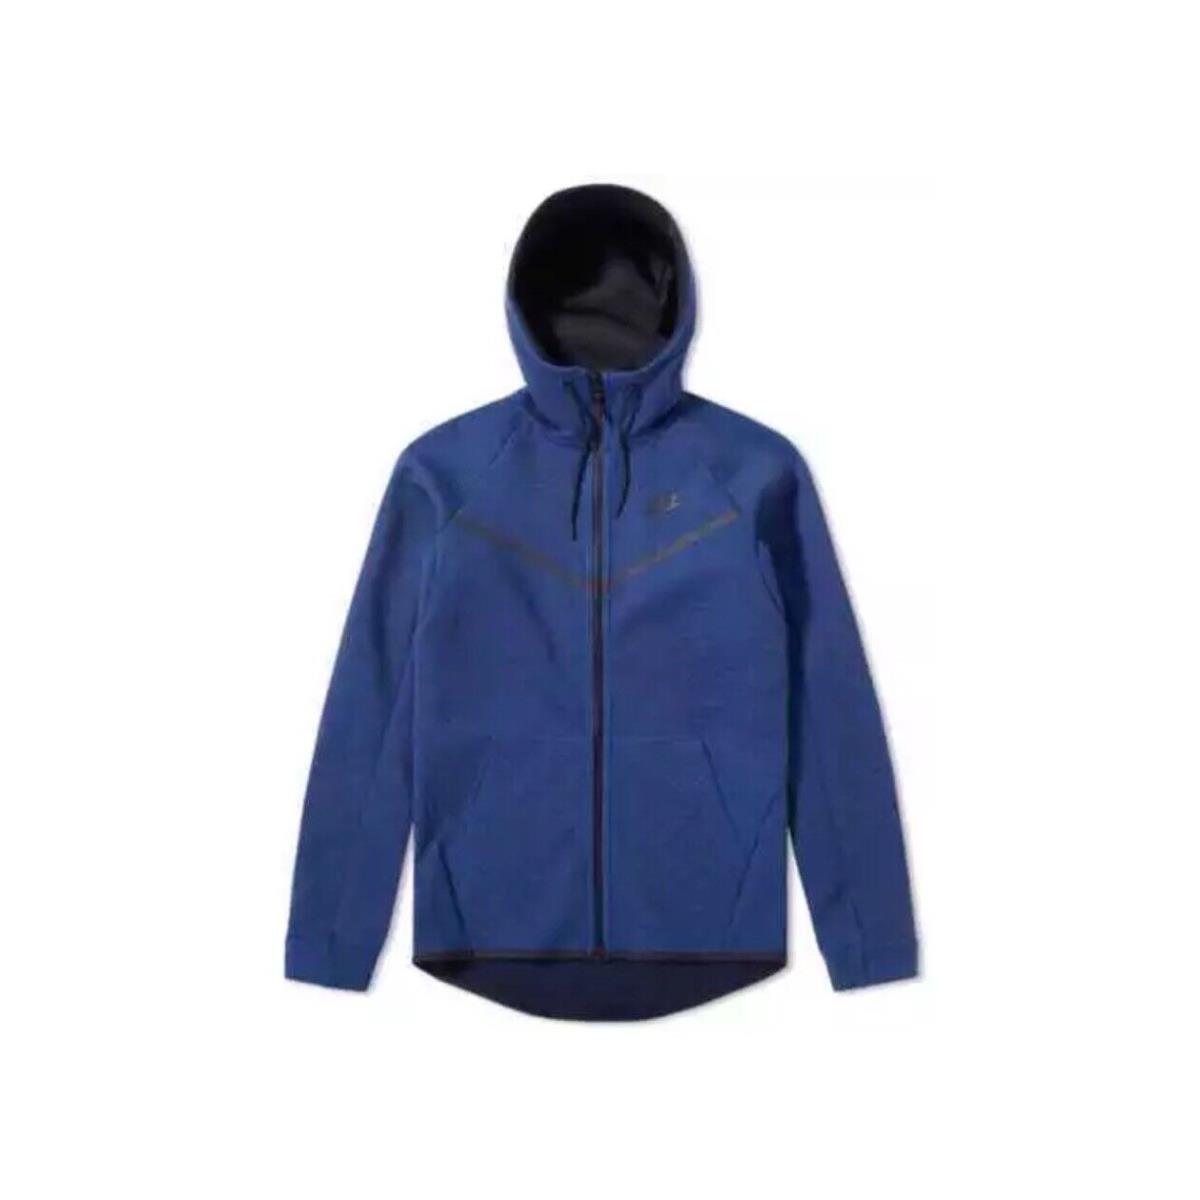 Nike Tech Fleece Windrunner Full Zip Hoodie 805144 451 Size 2XLTT Blue/black